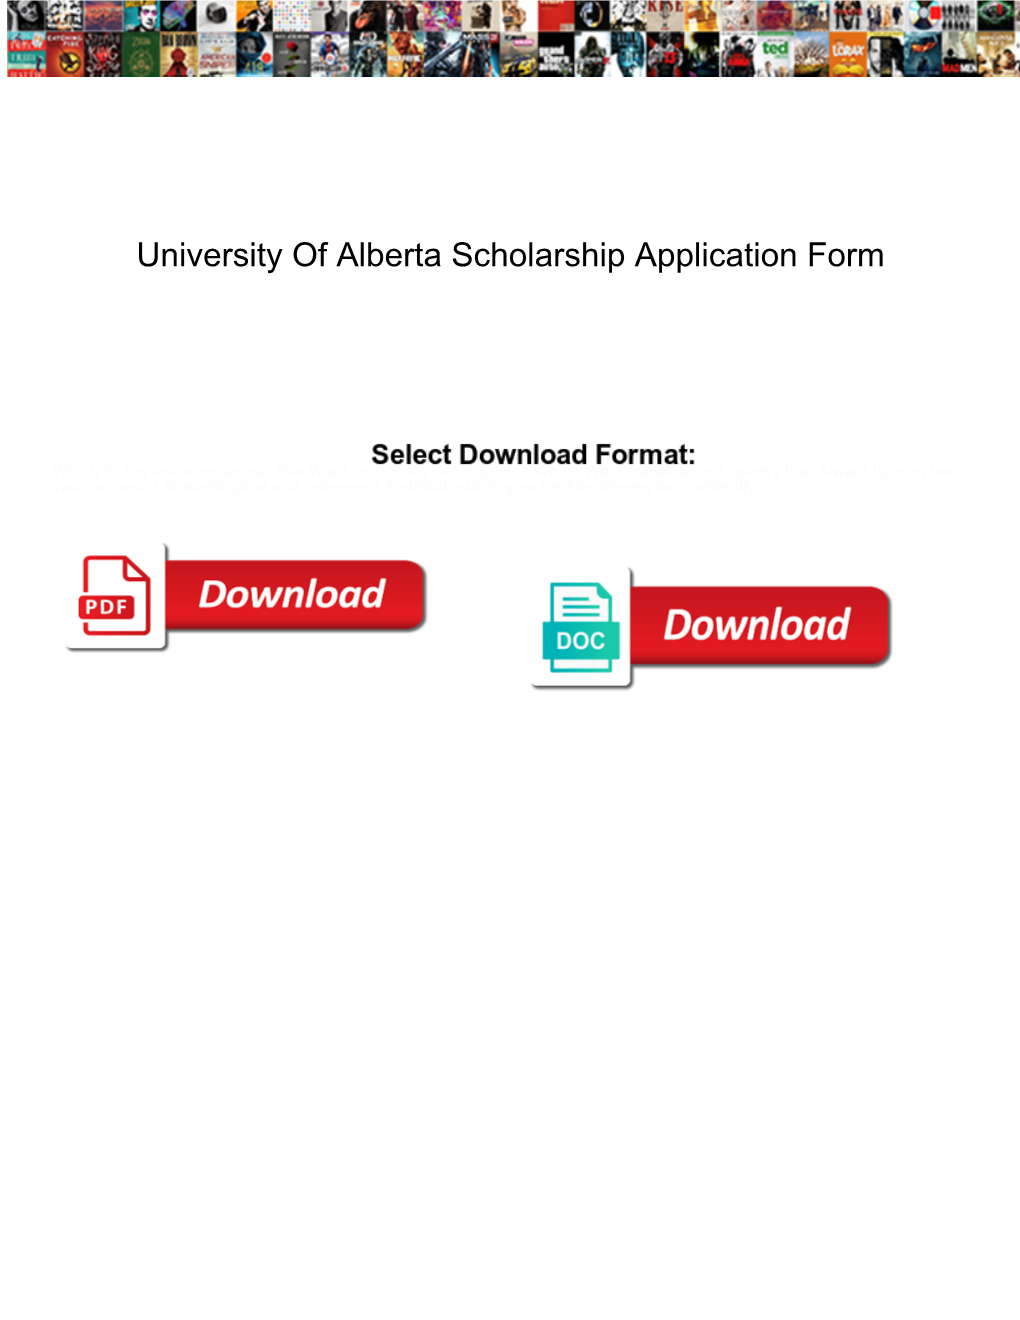 University of Alberta Scholarship Application Form